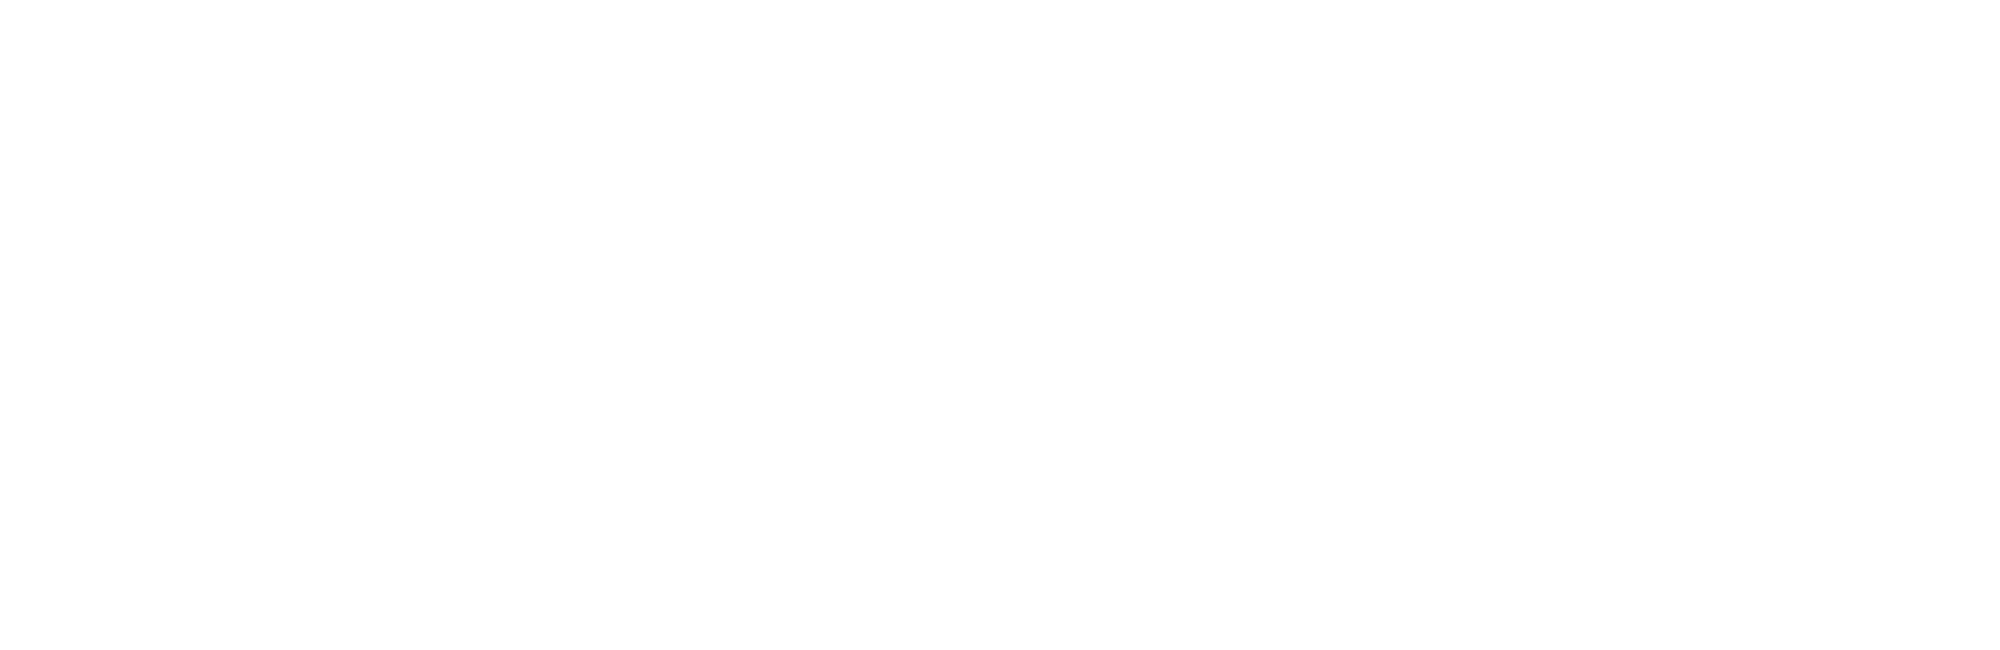 Aricoma logo